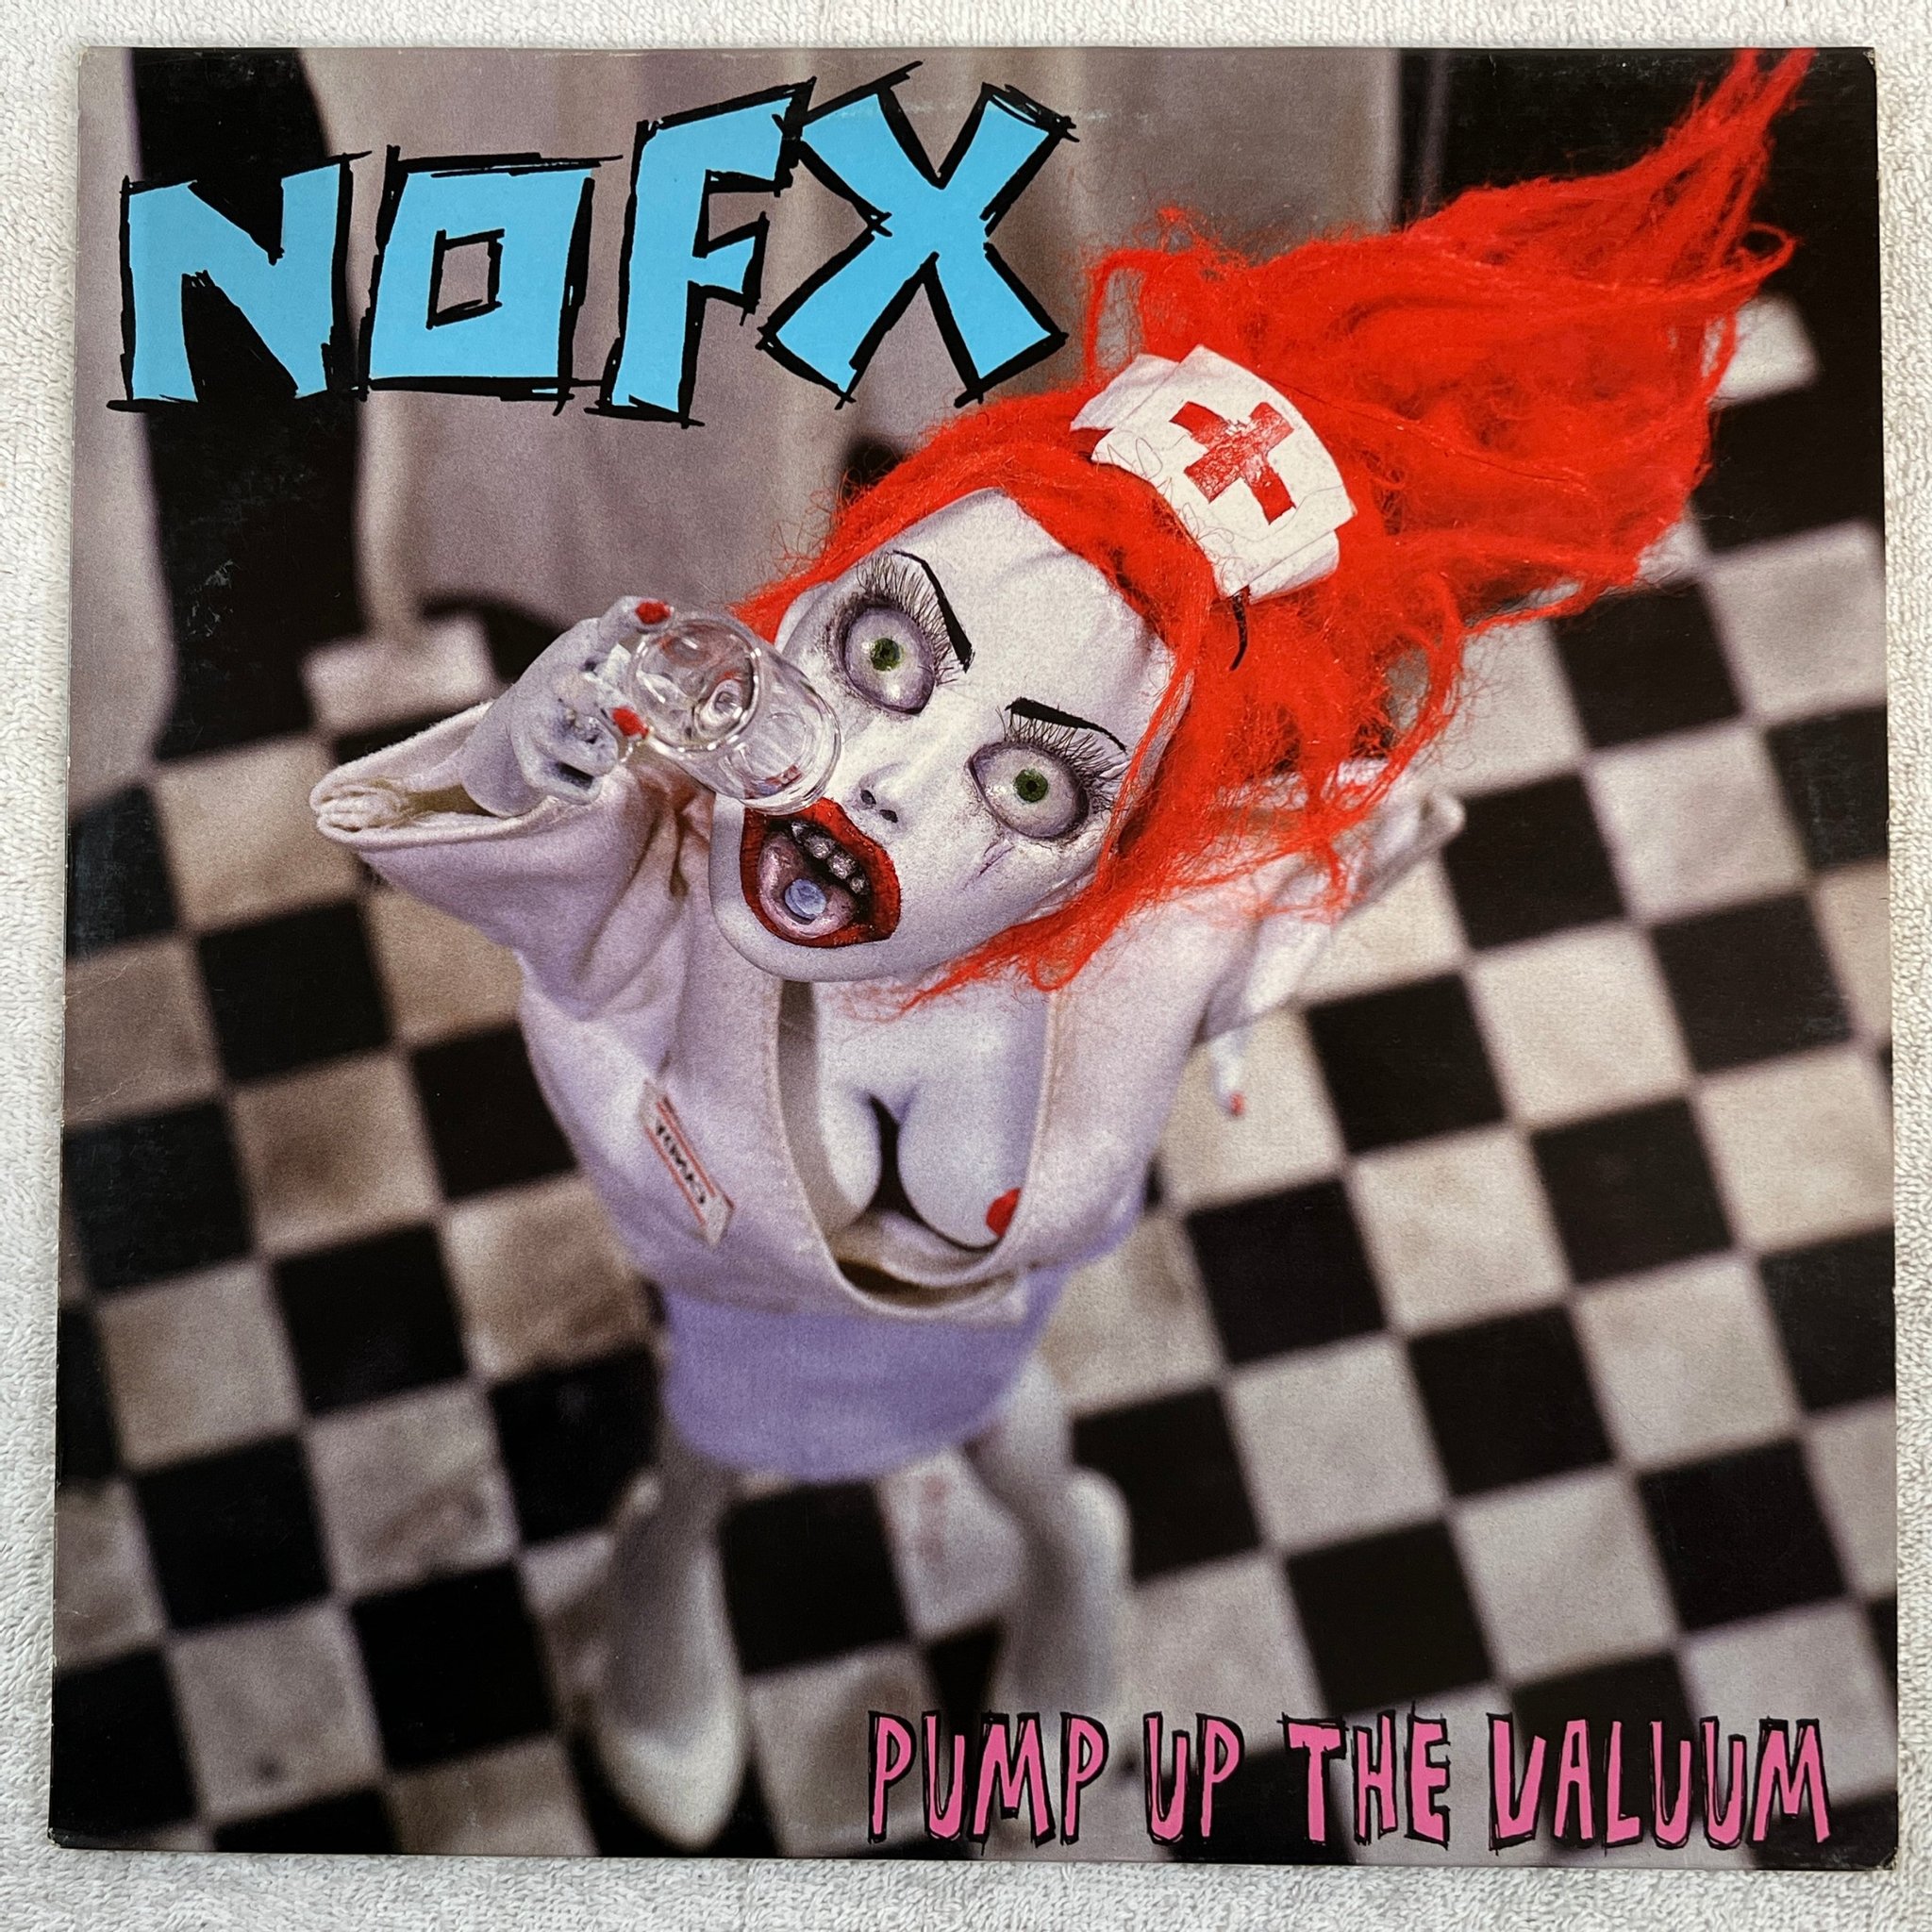 Omslagsbild för skivan NOFX Pump Up The Valuum LP 2000 EU EPIYAPH 6584-1 cyan vinyl ** punk rock **